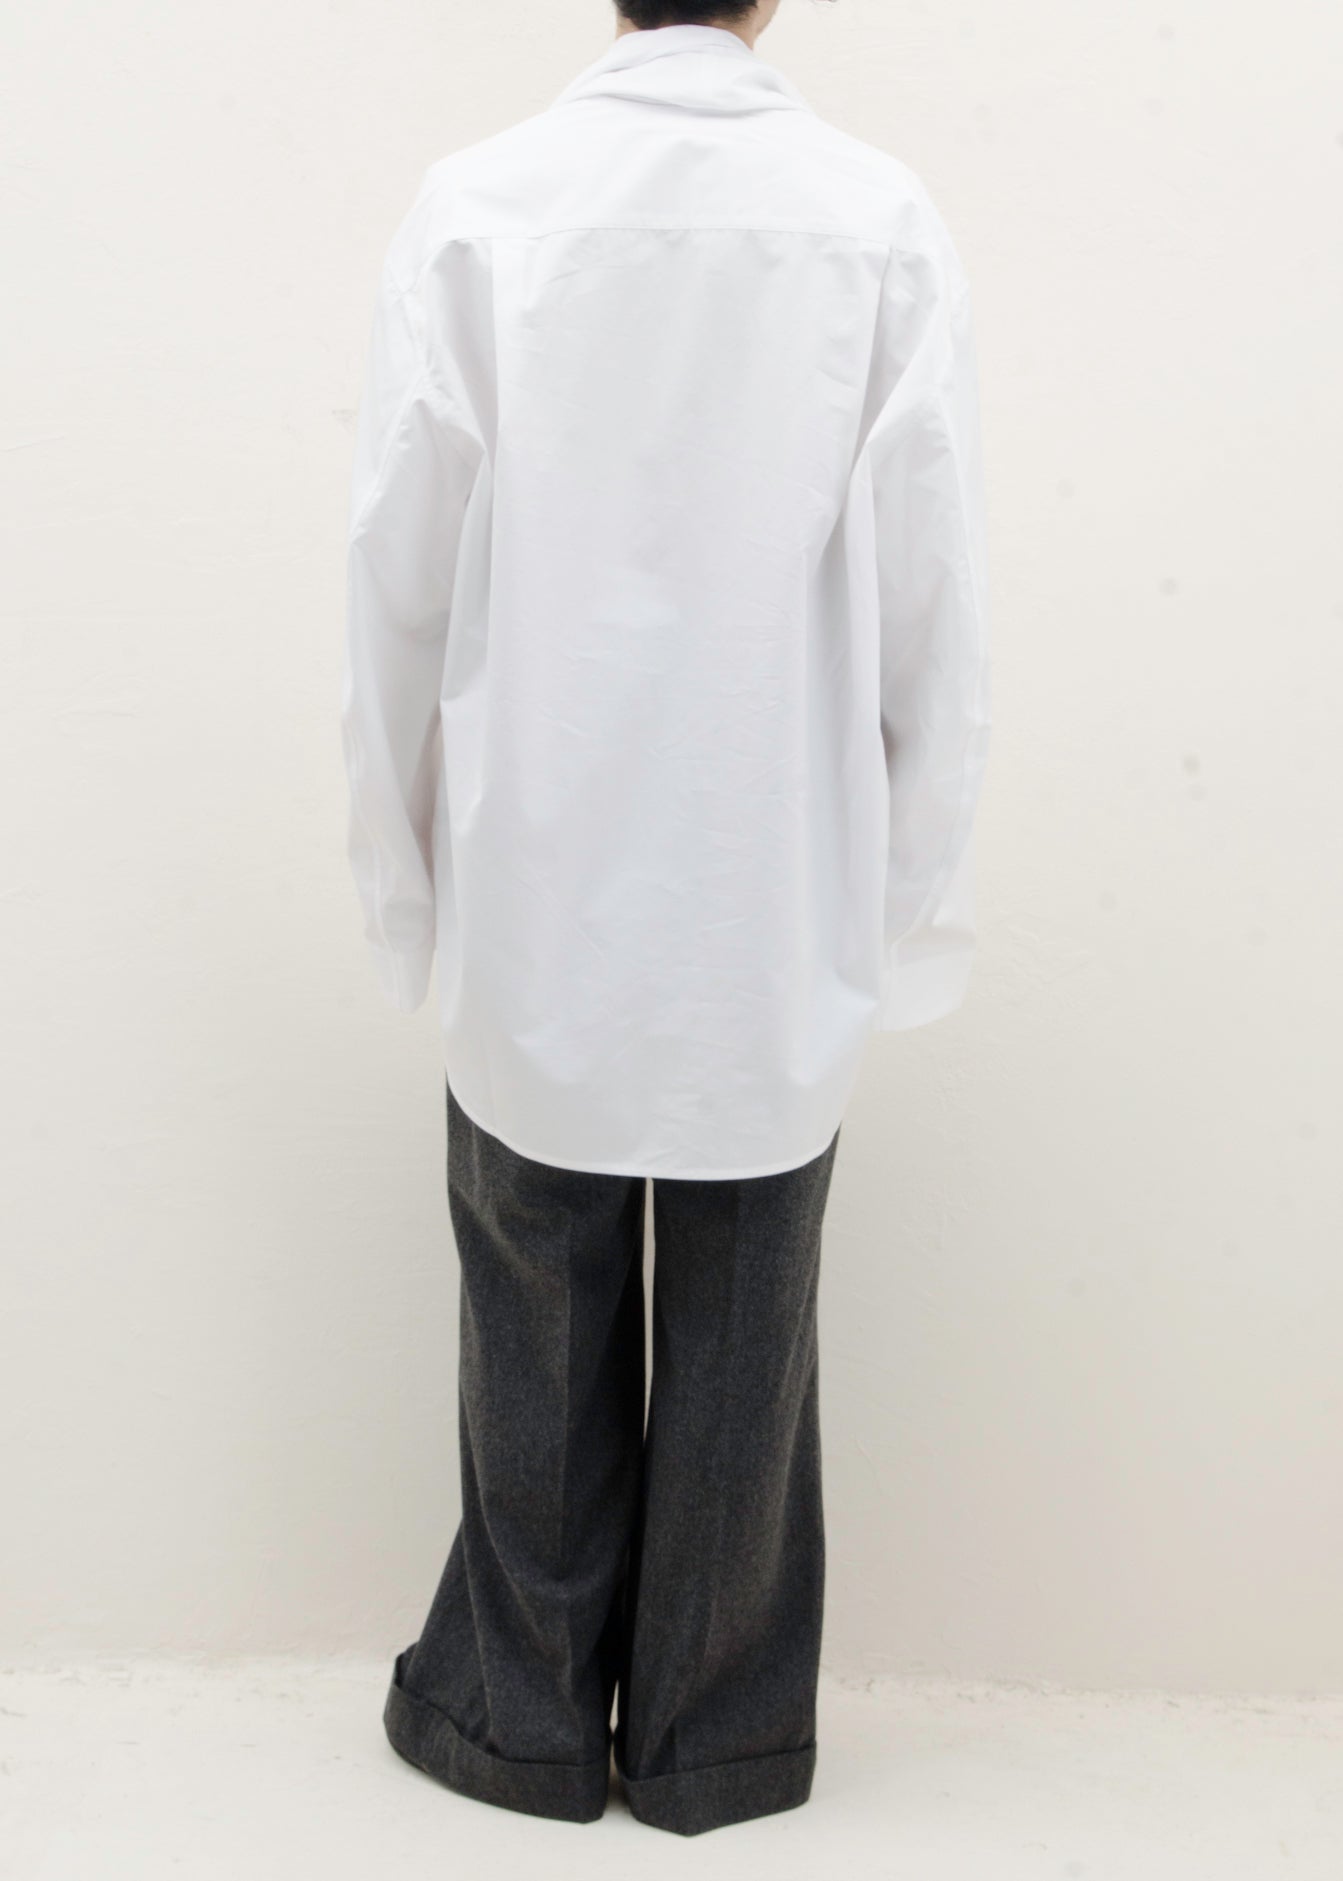 HED MAYNER 围巾领衬衫 / 白色